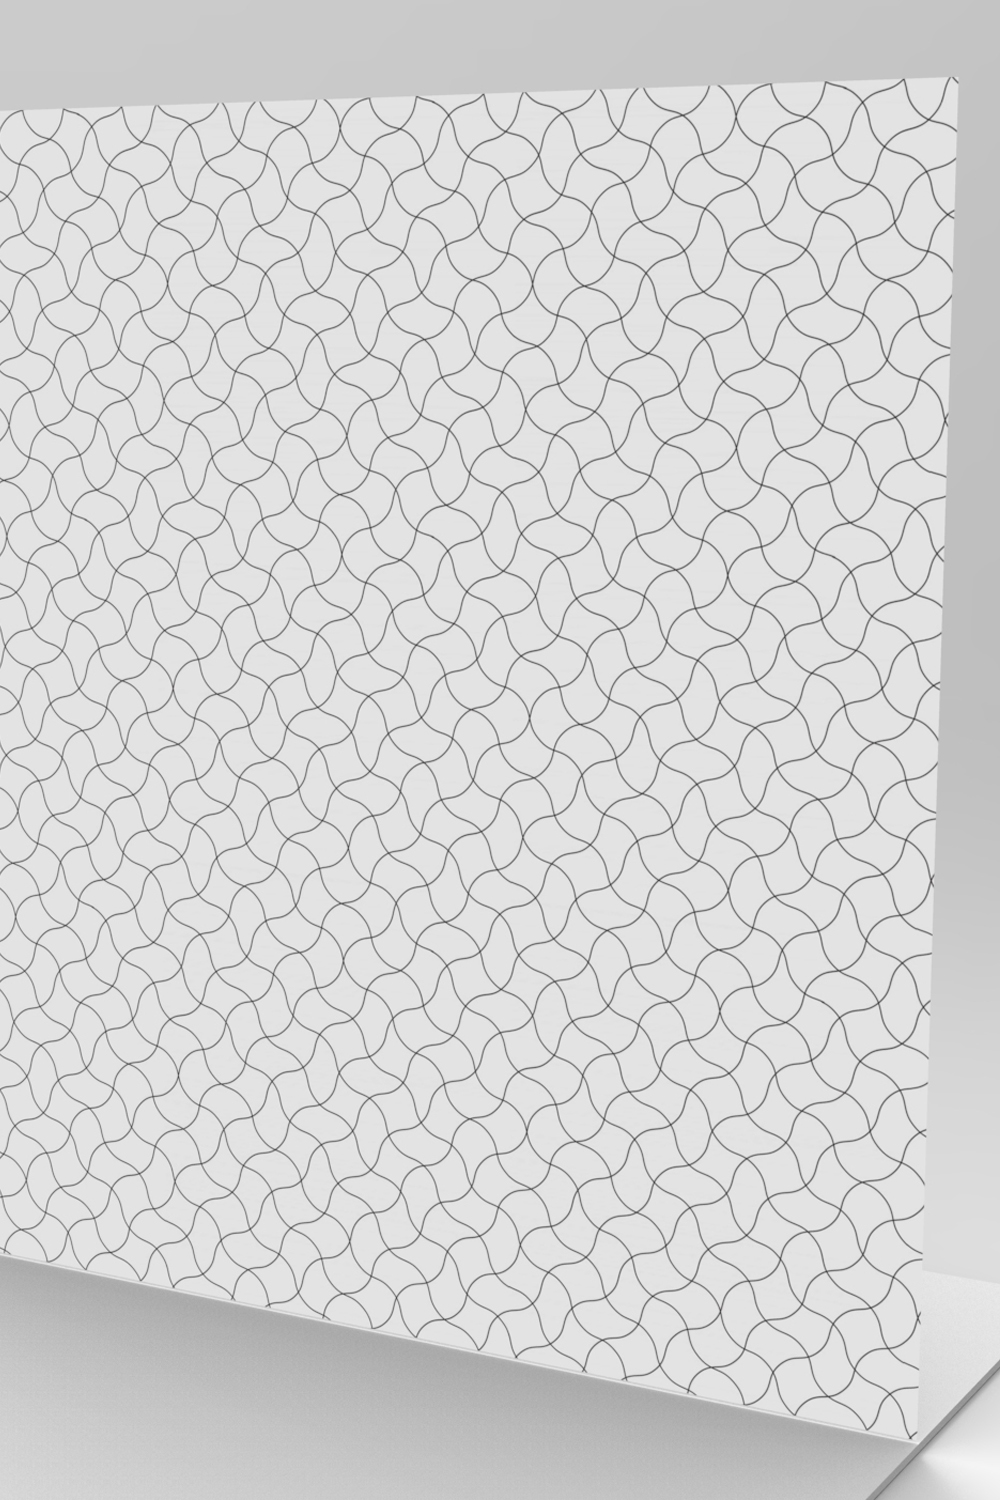 Seamless Wall Sticker texture pinterest preview image.